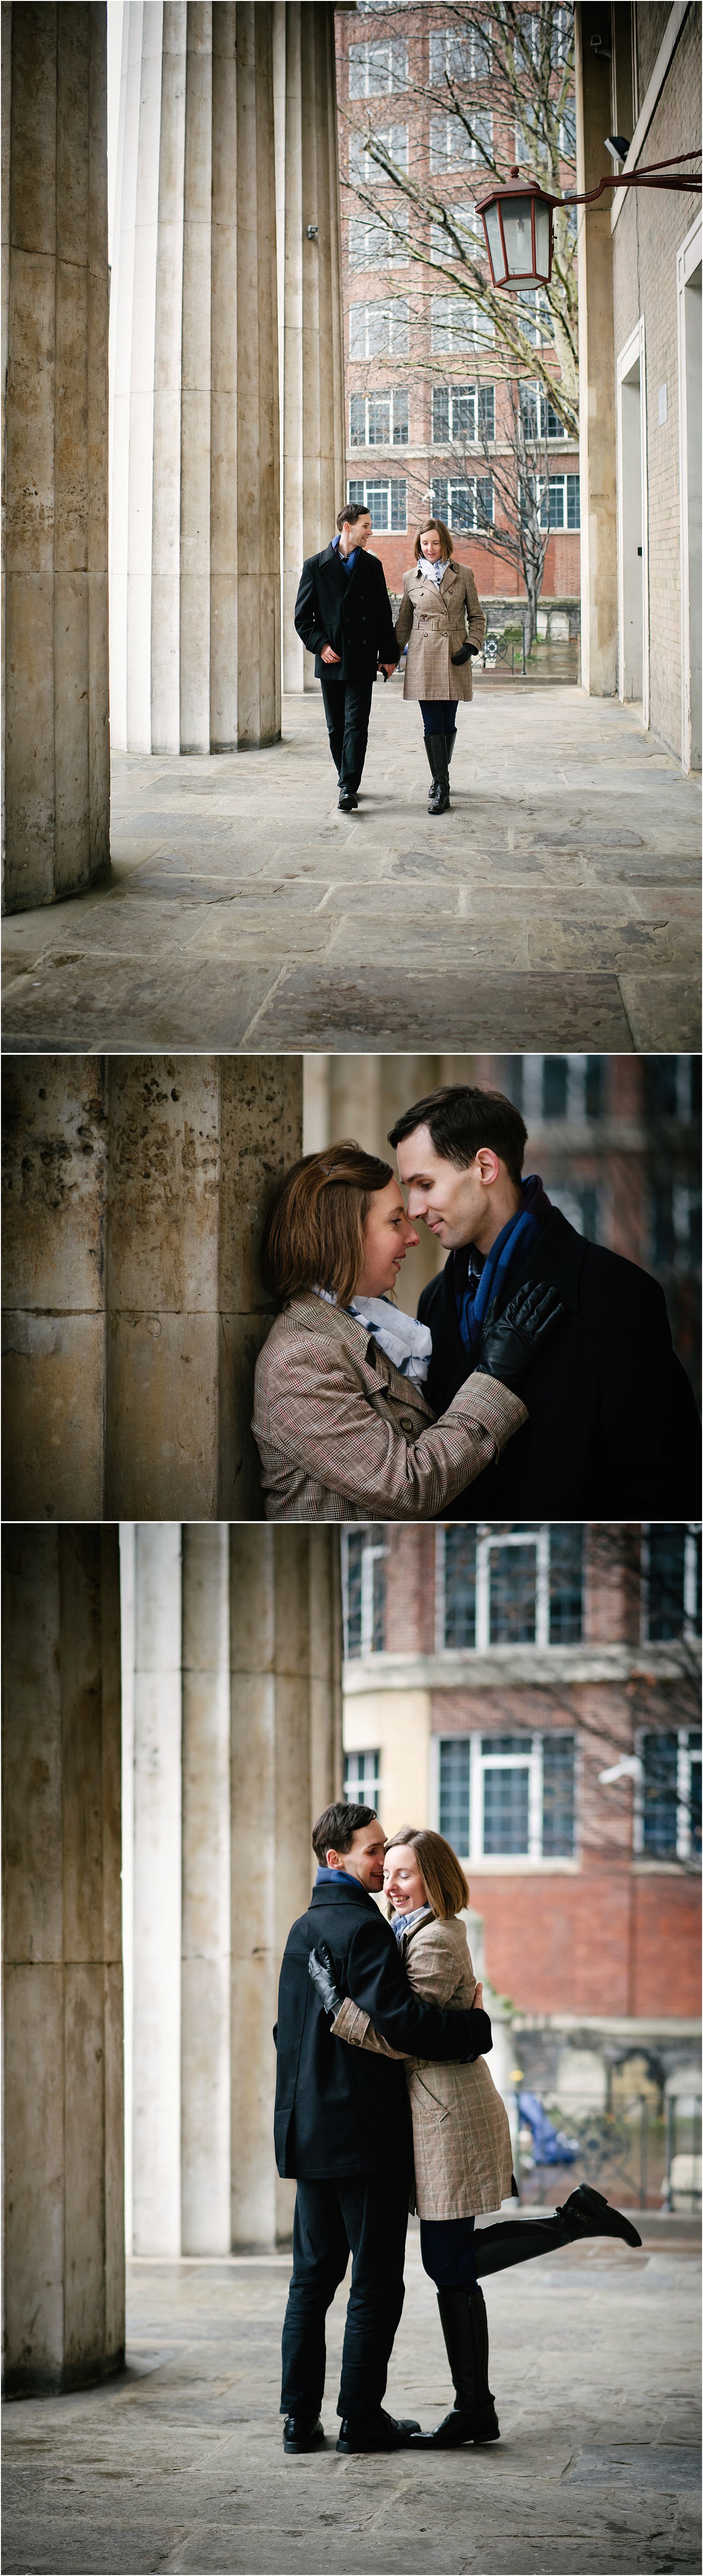 london-waterloo-engagement-photoshoot-winter-tom-helen-frances-lily-sawyer-photo